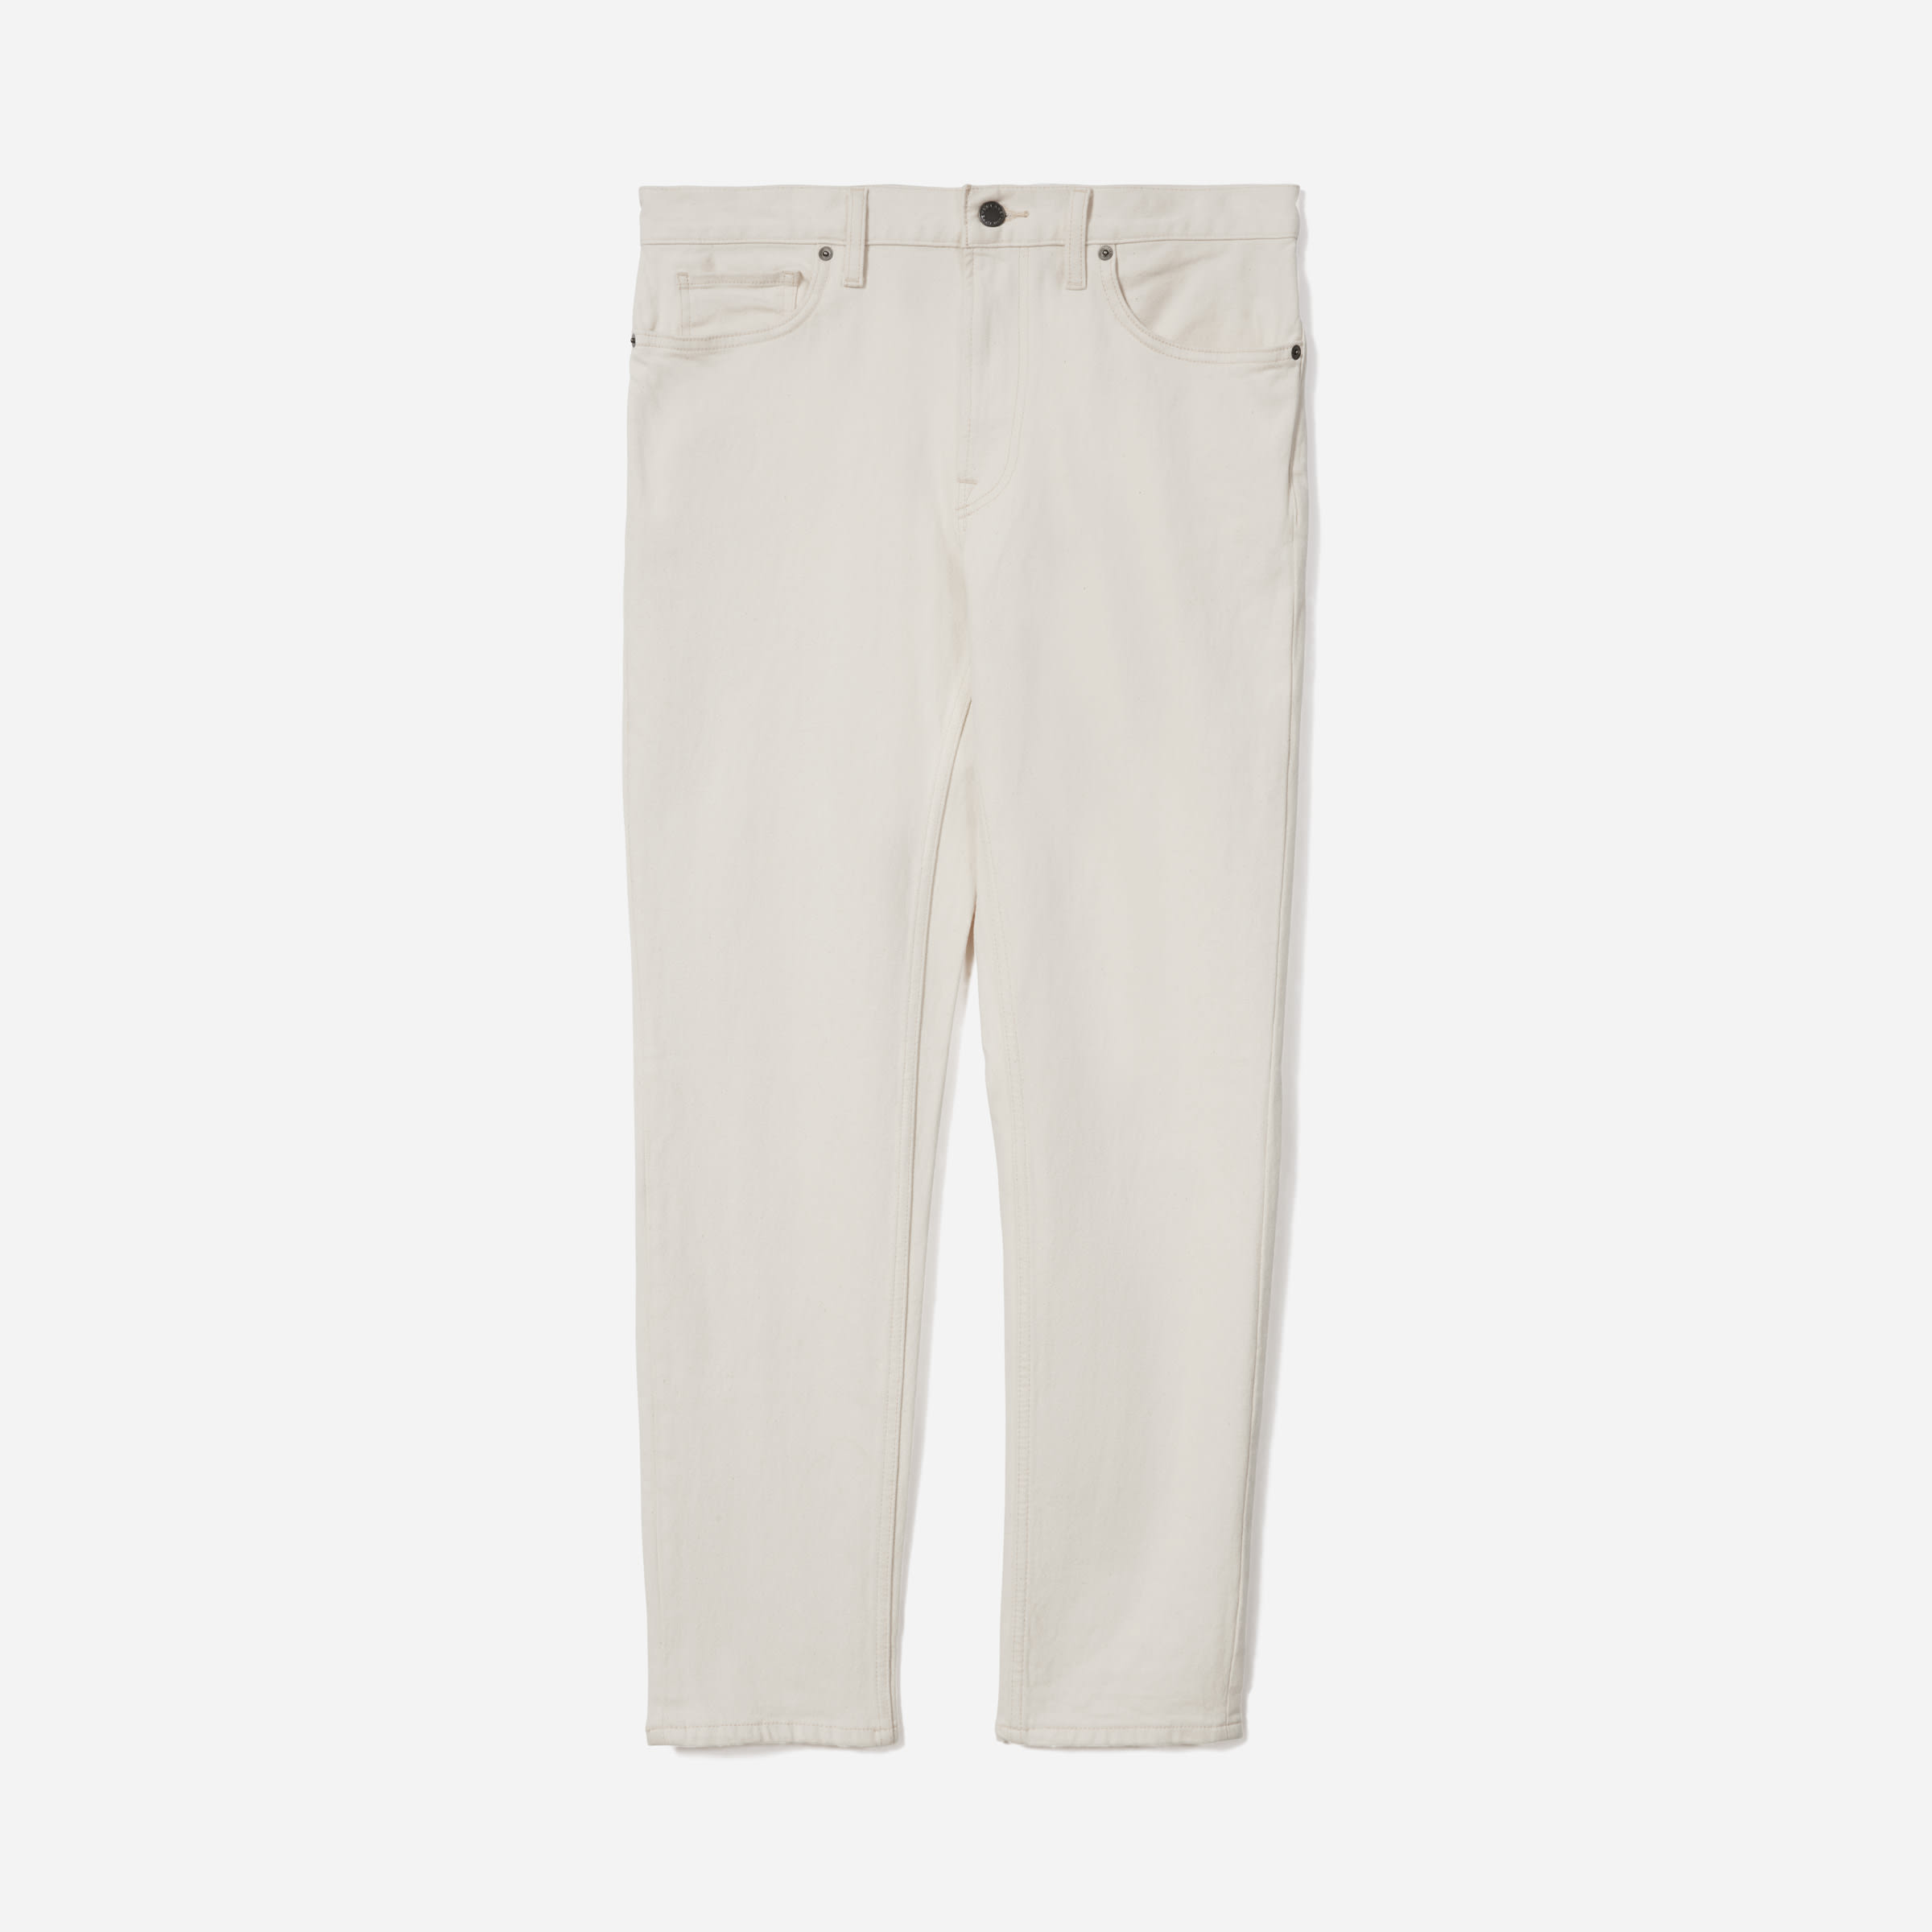 Everlane Men's Organic Cotton Slim Fit Jean in Faded Sky Blue, Size 30x30